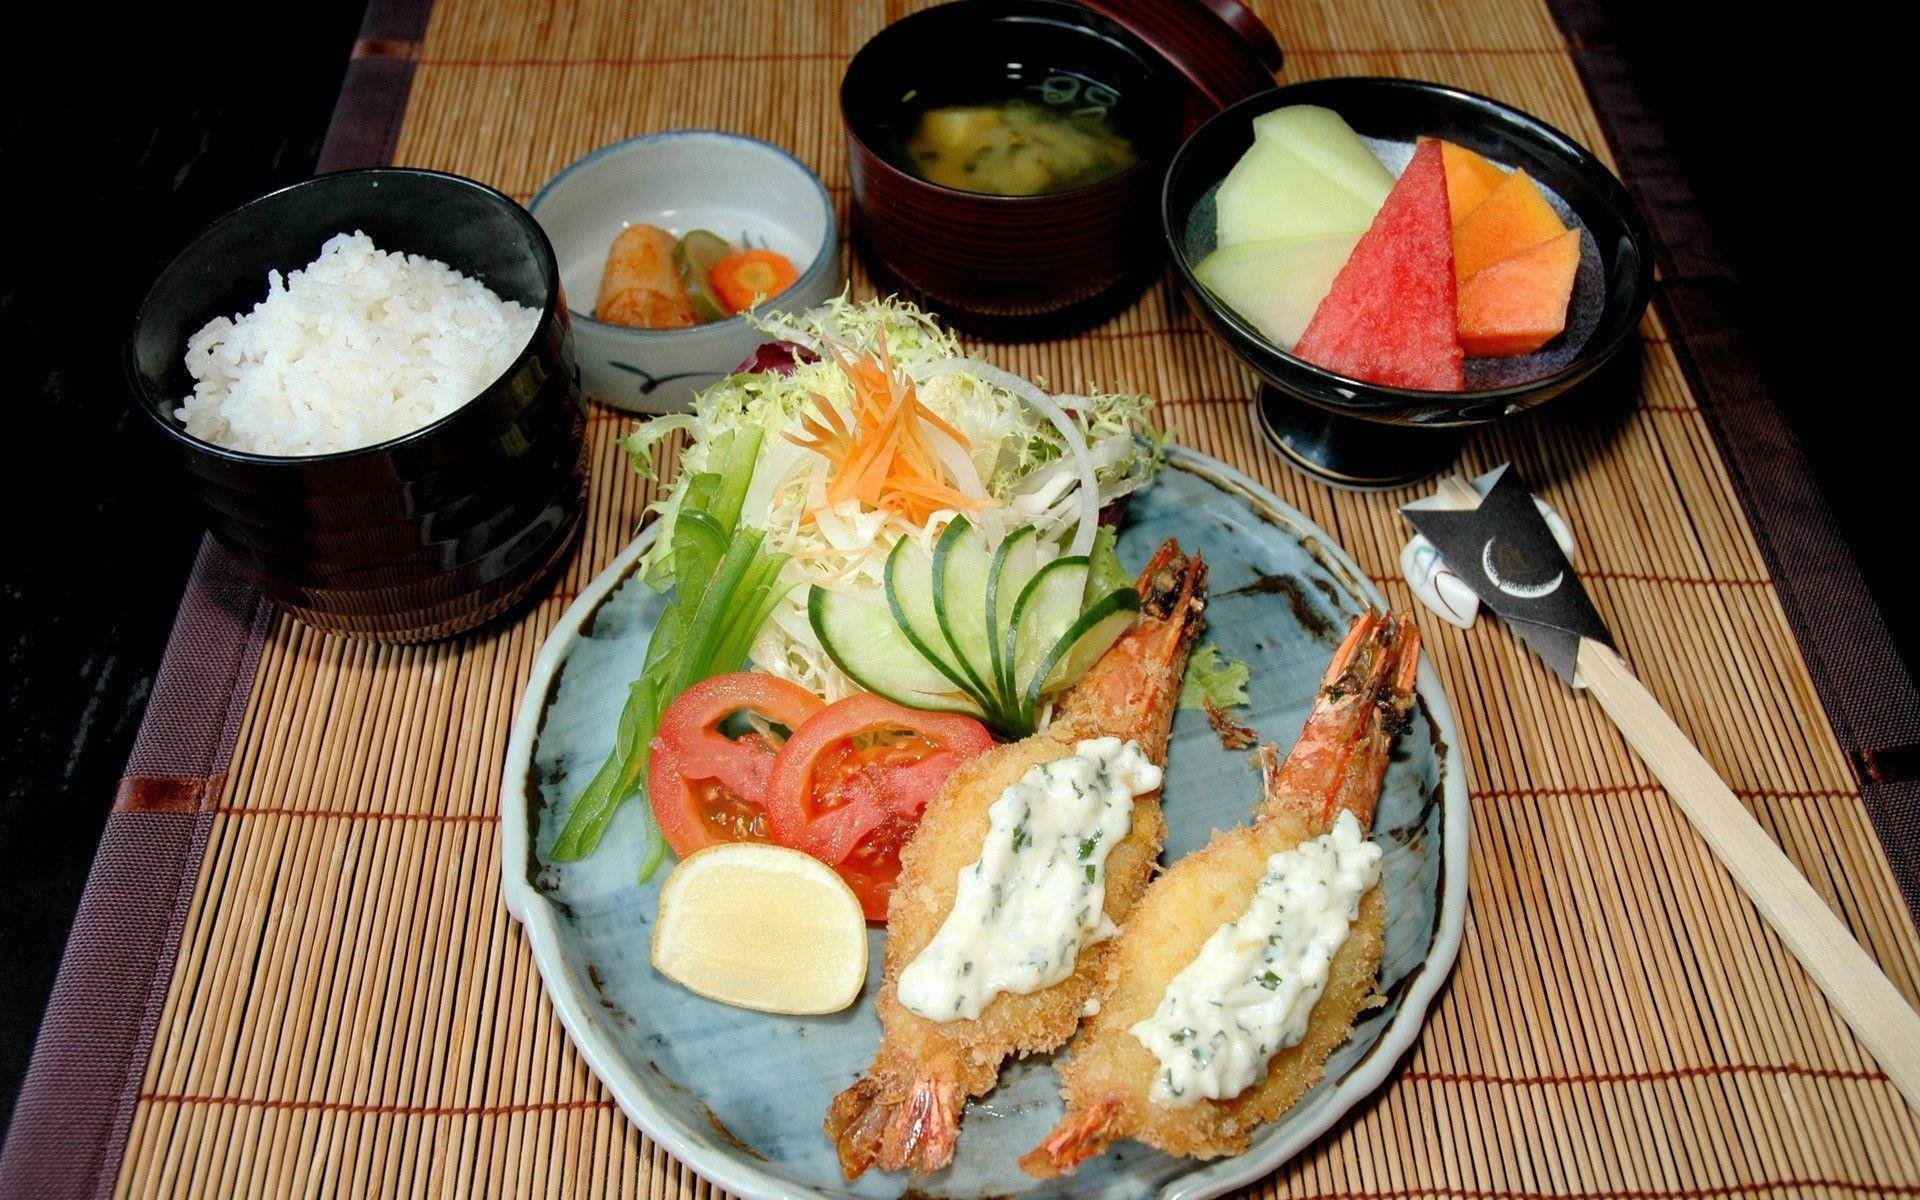 Savory Japanese Lunch Feast - Crispy Tempura And Fresh Veggies Background